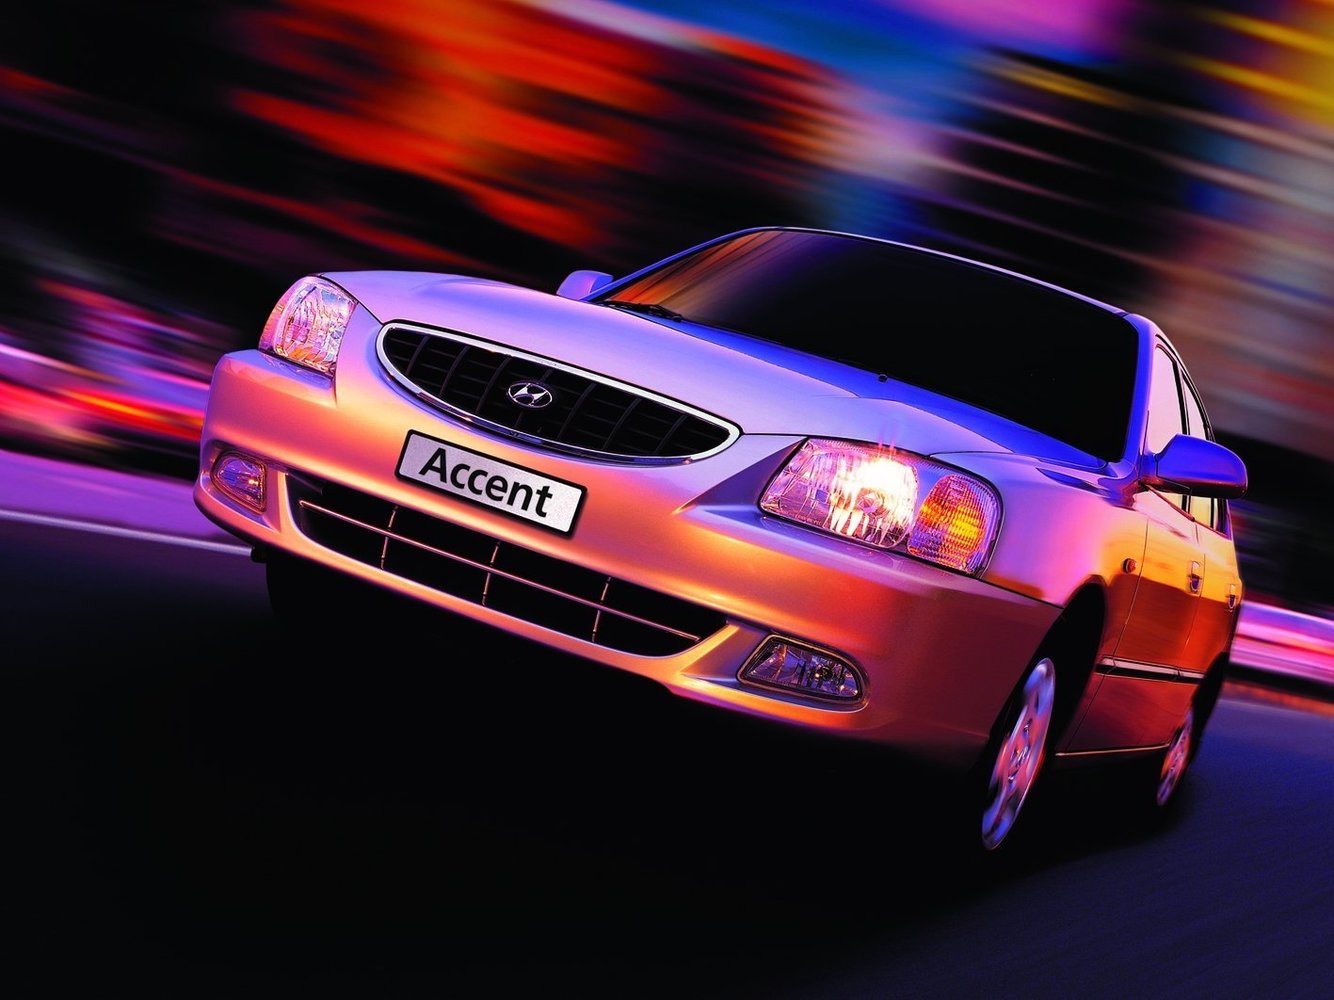 седан Hyundai Accent 2001 - 2012г выпуска модификация 1.5 AT (102 л.с.)